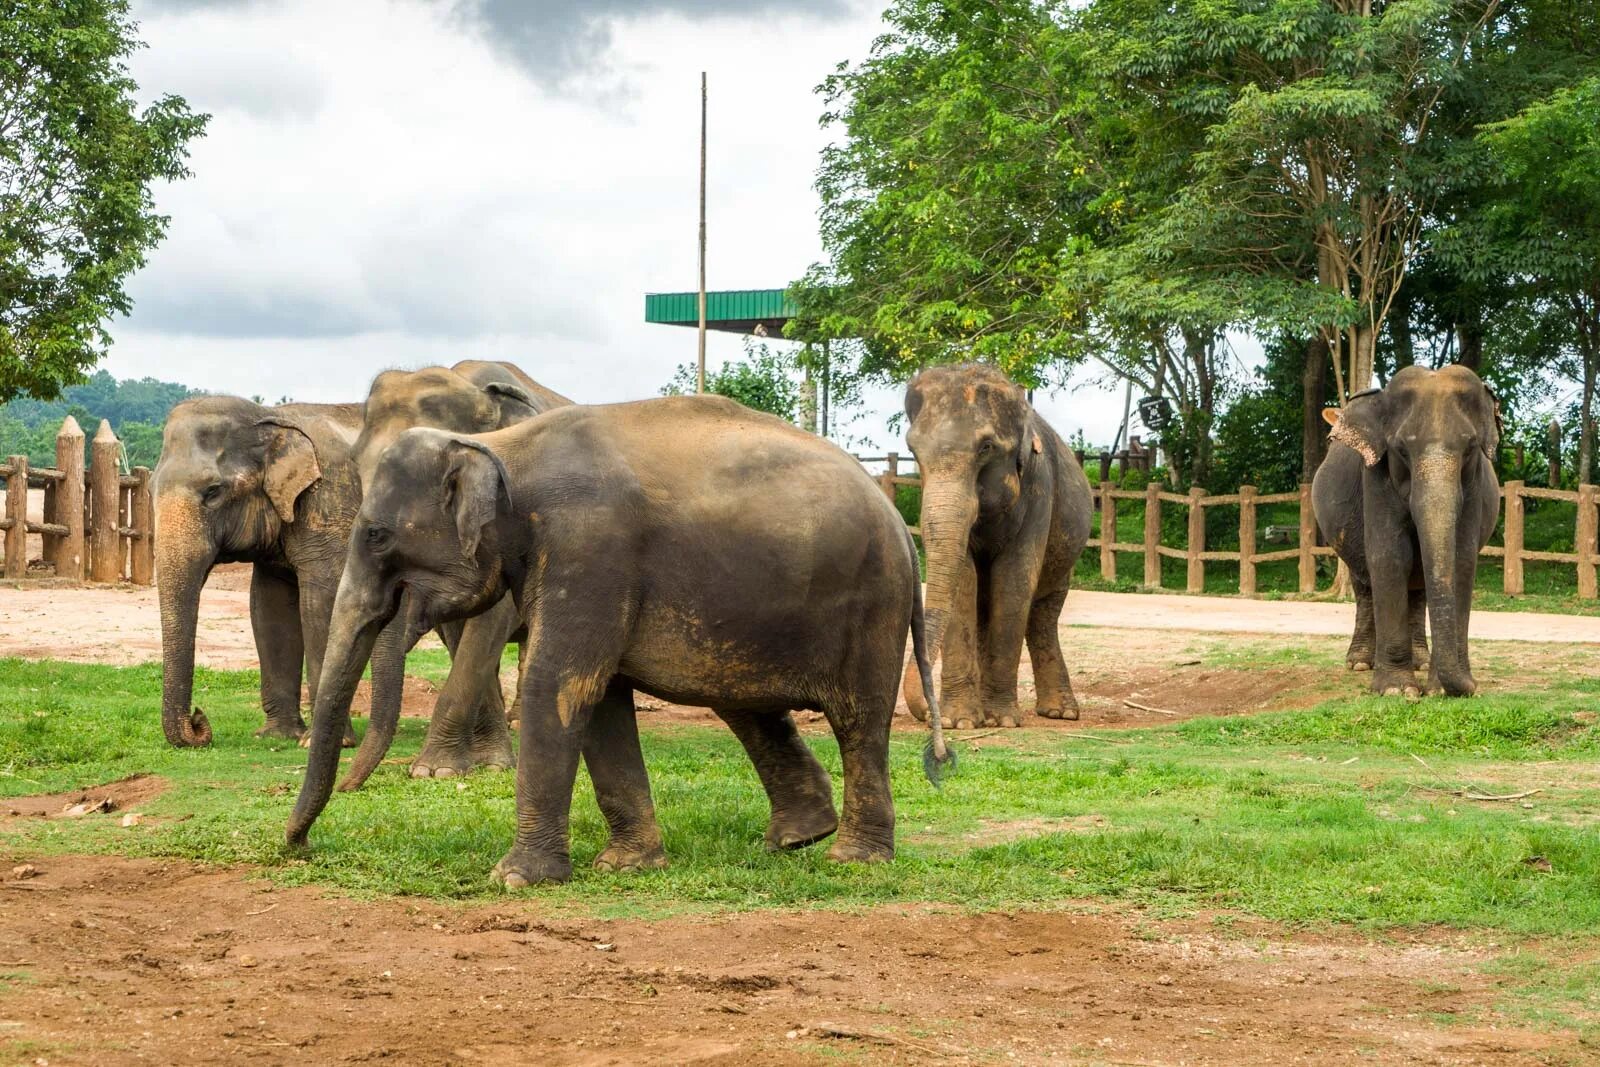 Пиннавела шри. Пинавелла питомник слонов. Слоновий питомник Шри Ланка. Пиннавела (Pinnawala). Pinnawala Elephant Orphanage.